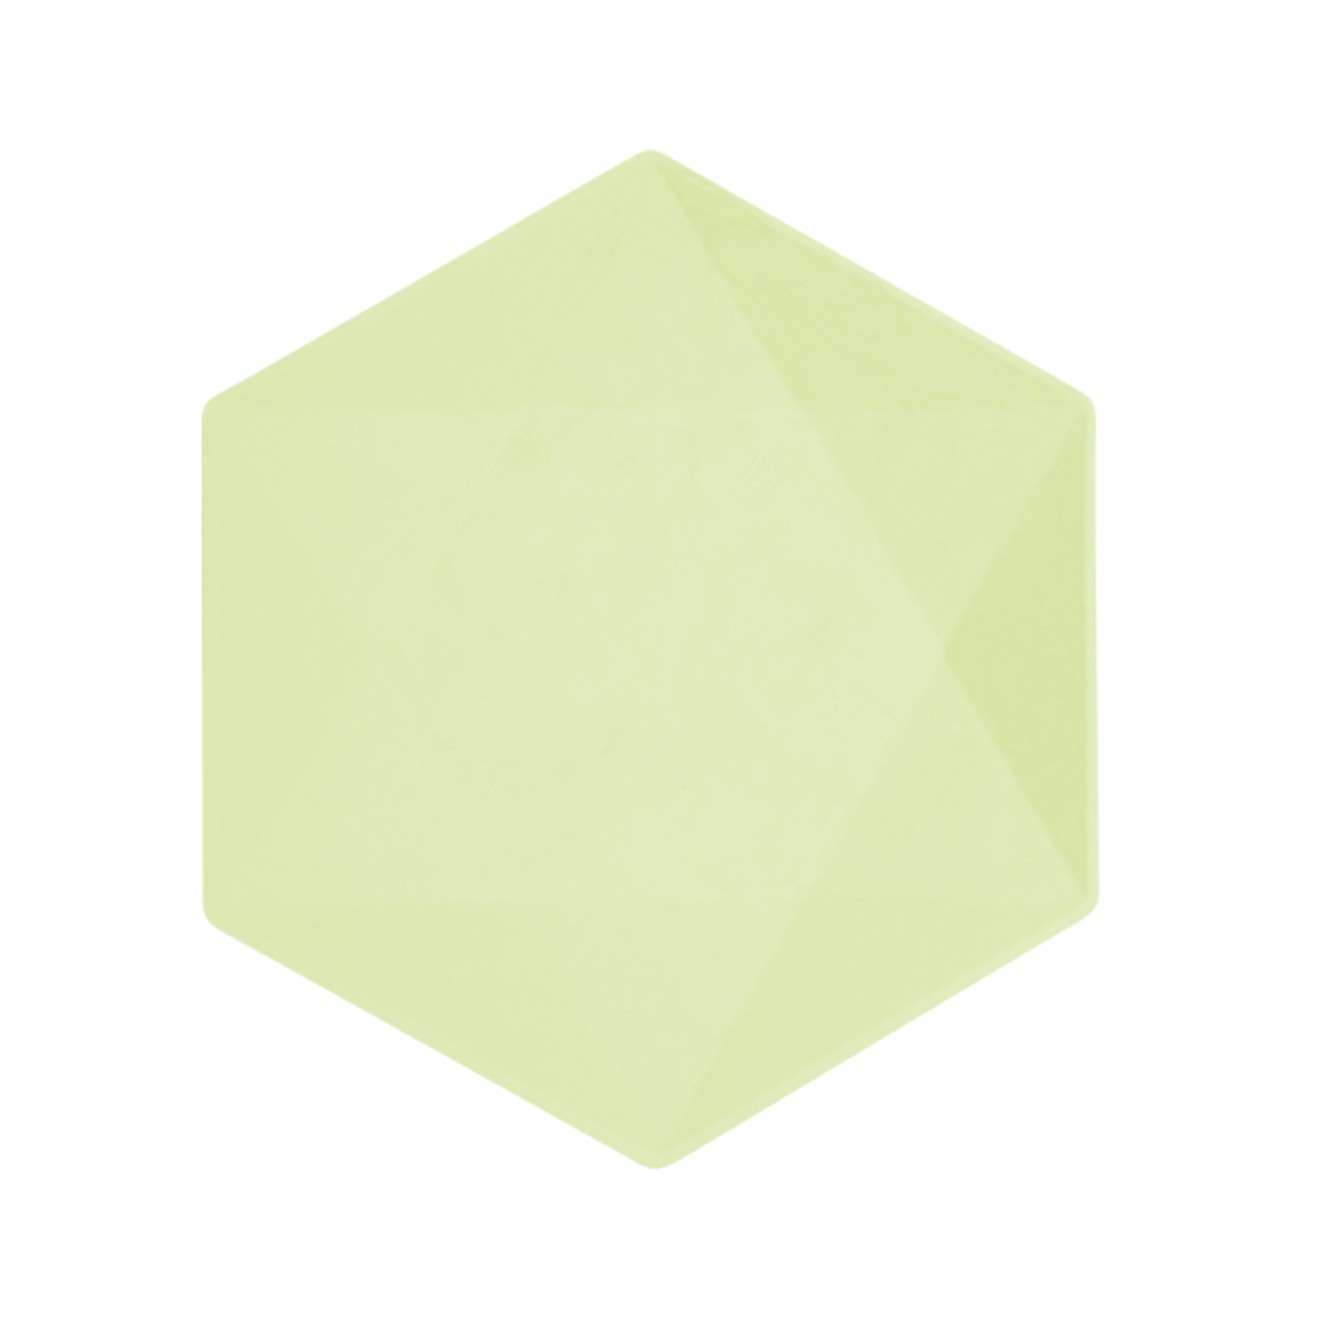 6 Partyteller XL - Hexagonal - grün